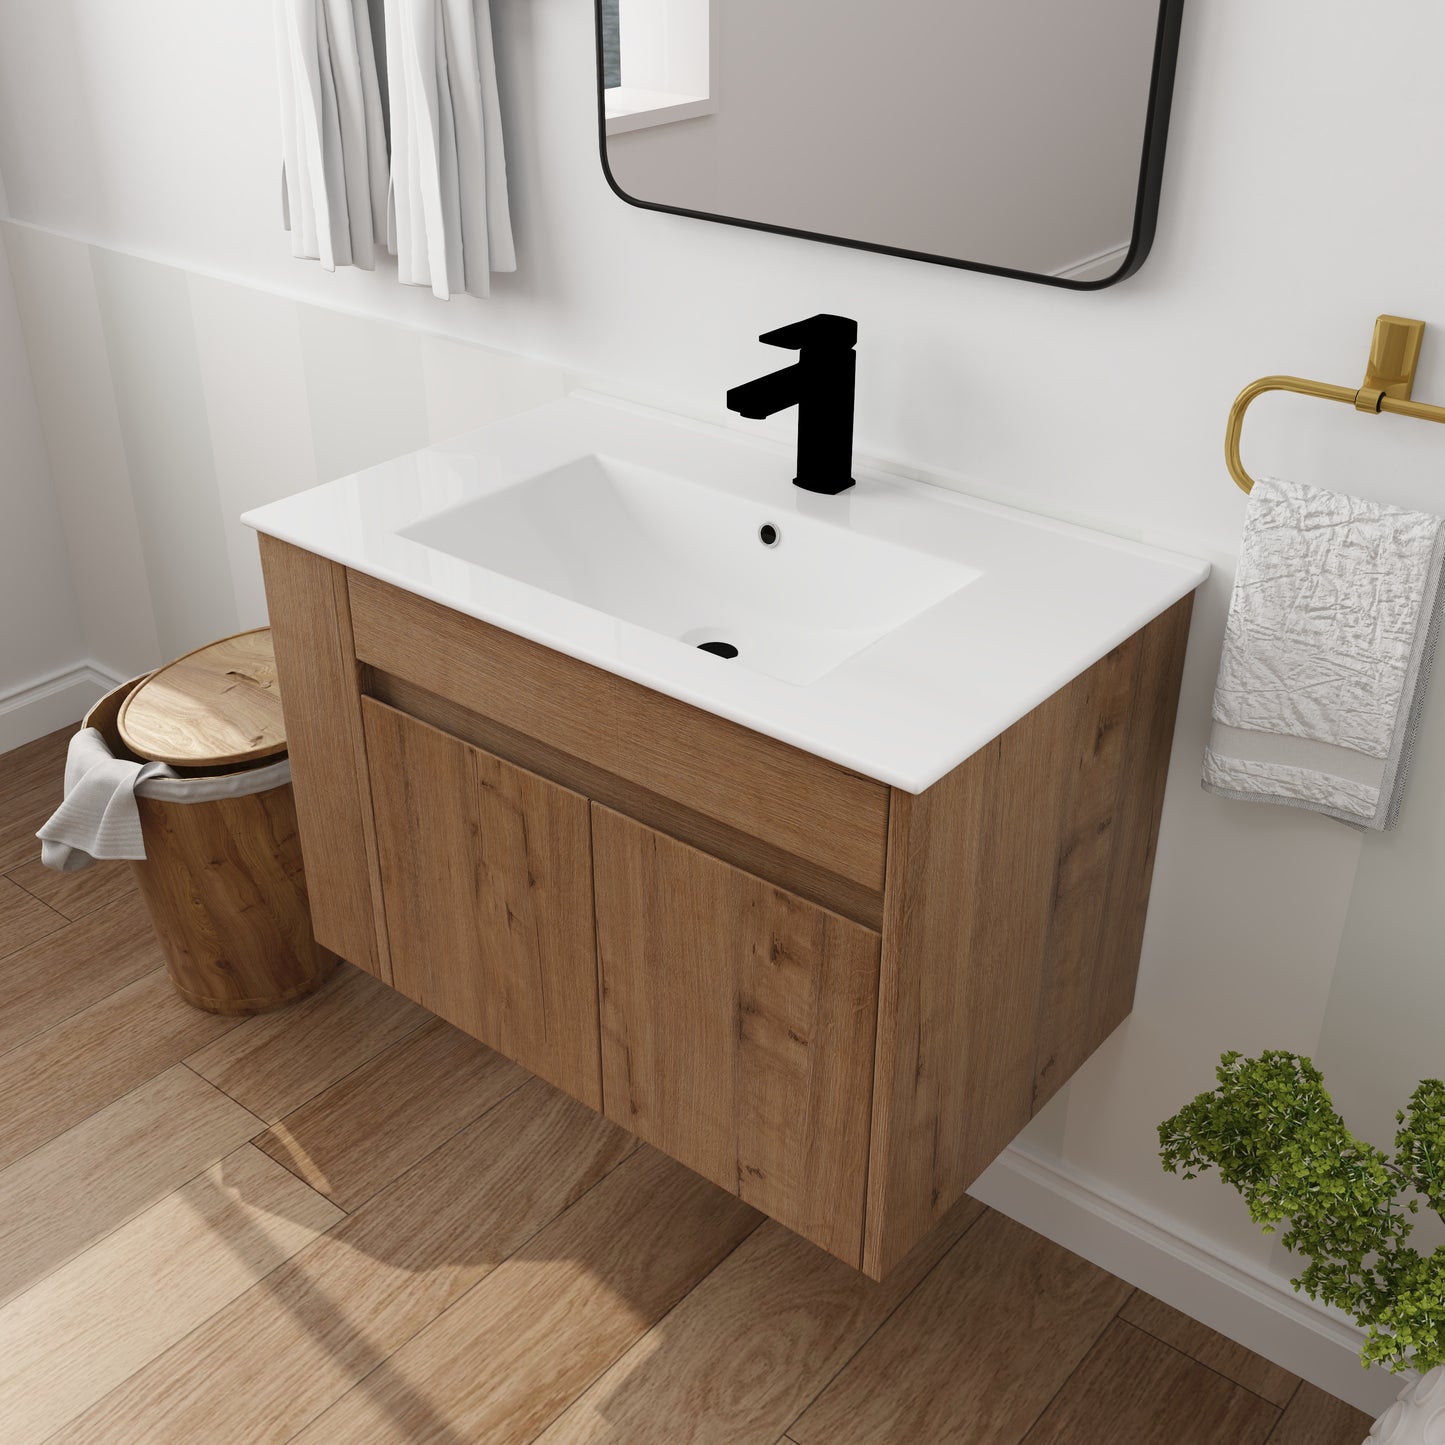 30" Bathroom Vanity With White Ceramic Basin